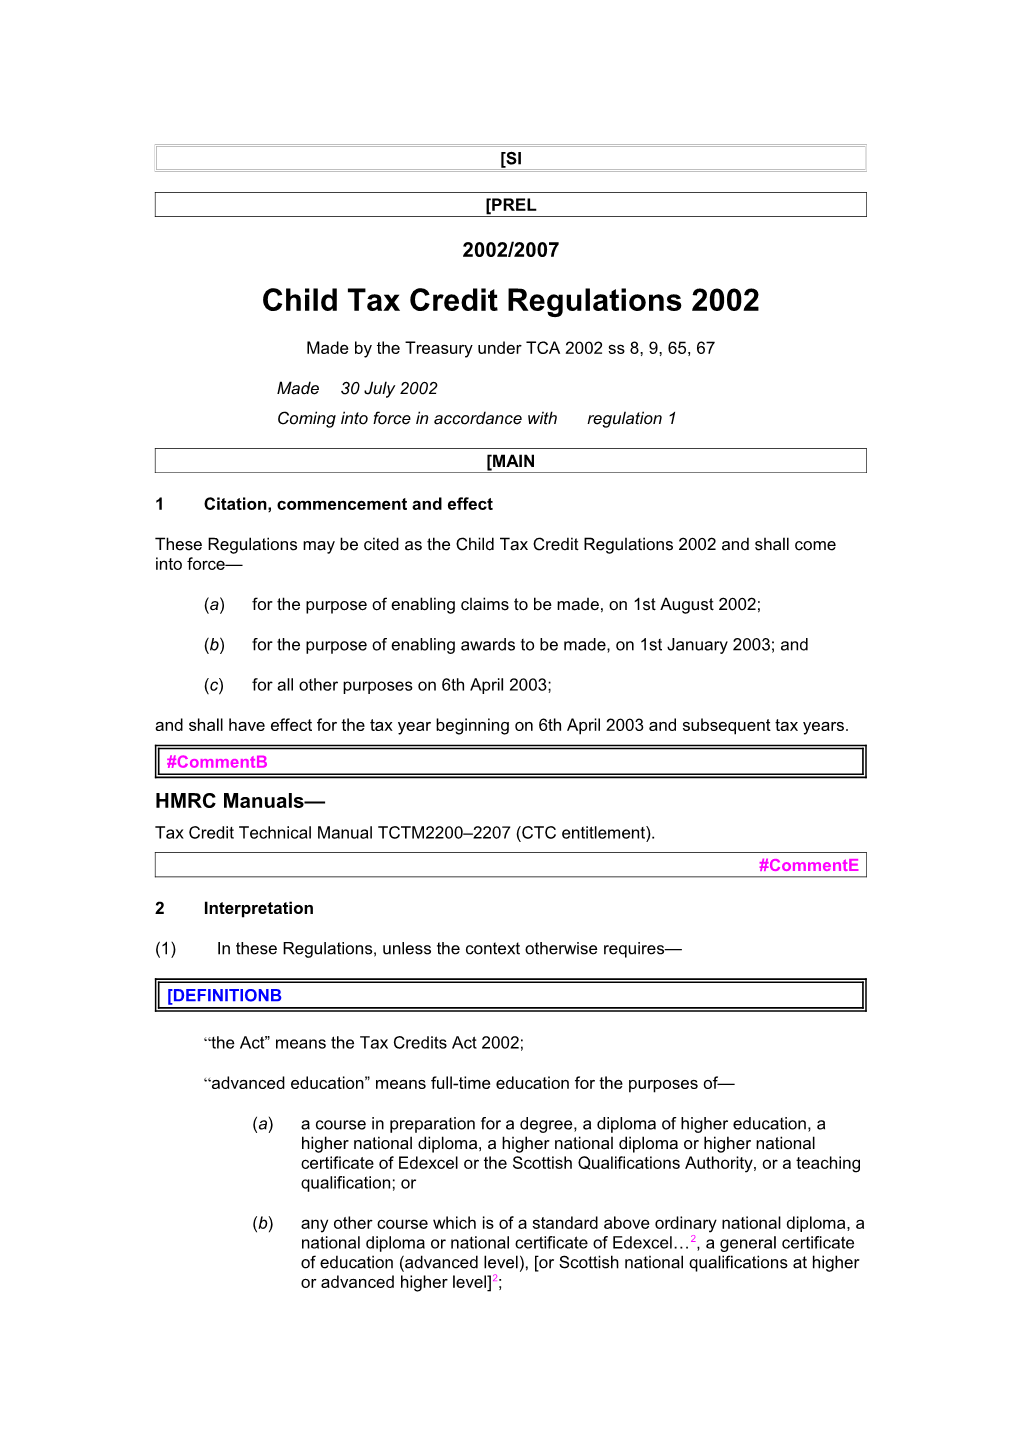 Child Tax Credit Regulations 2002 s1